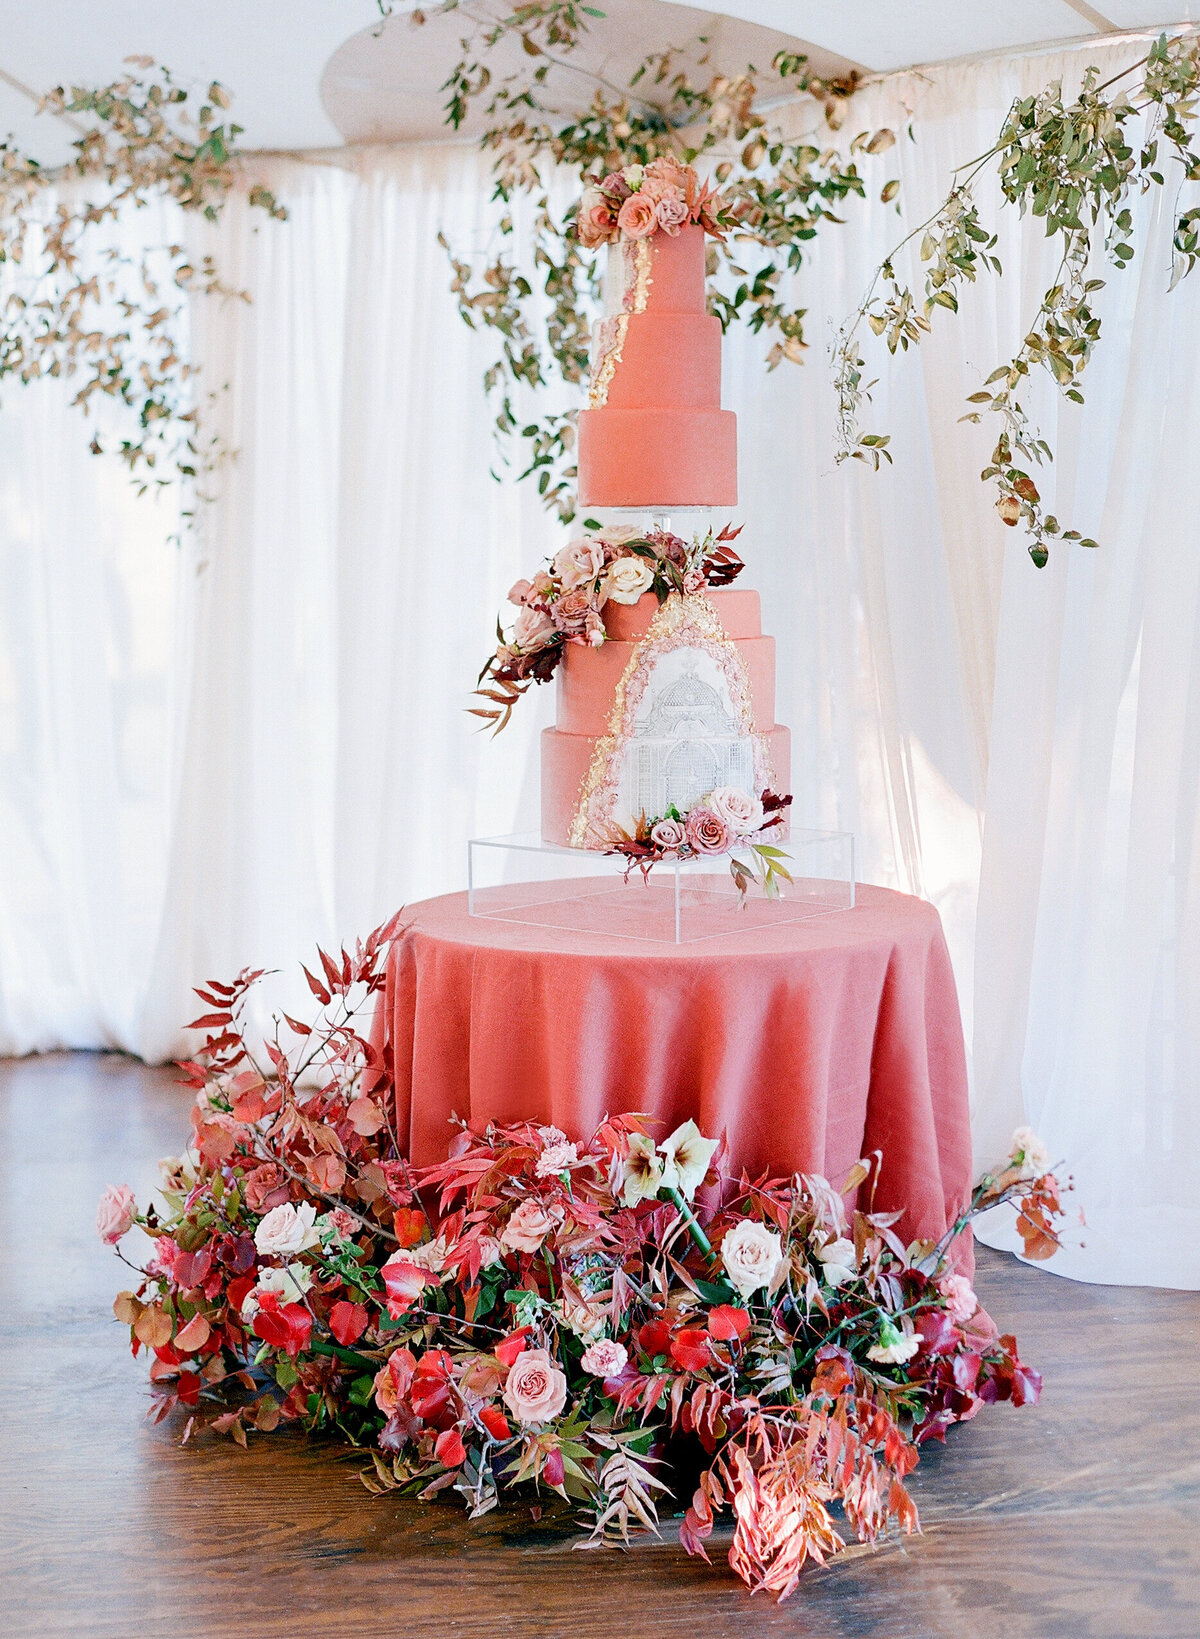 max-owens-design-jose-villa-wedding-40-cake